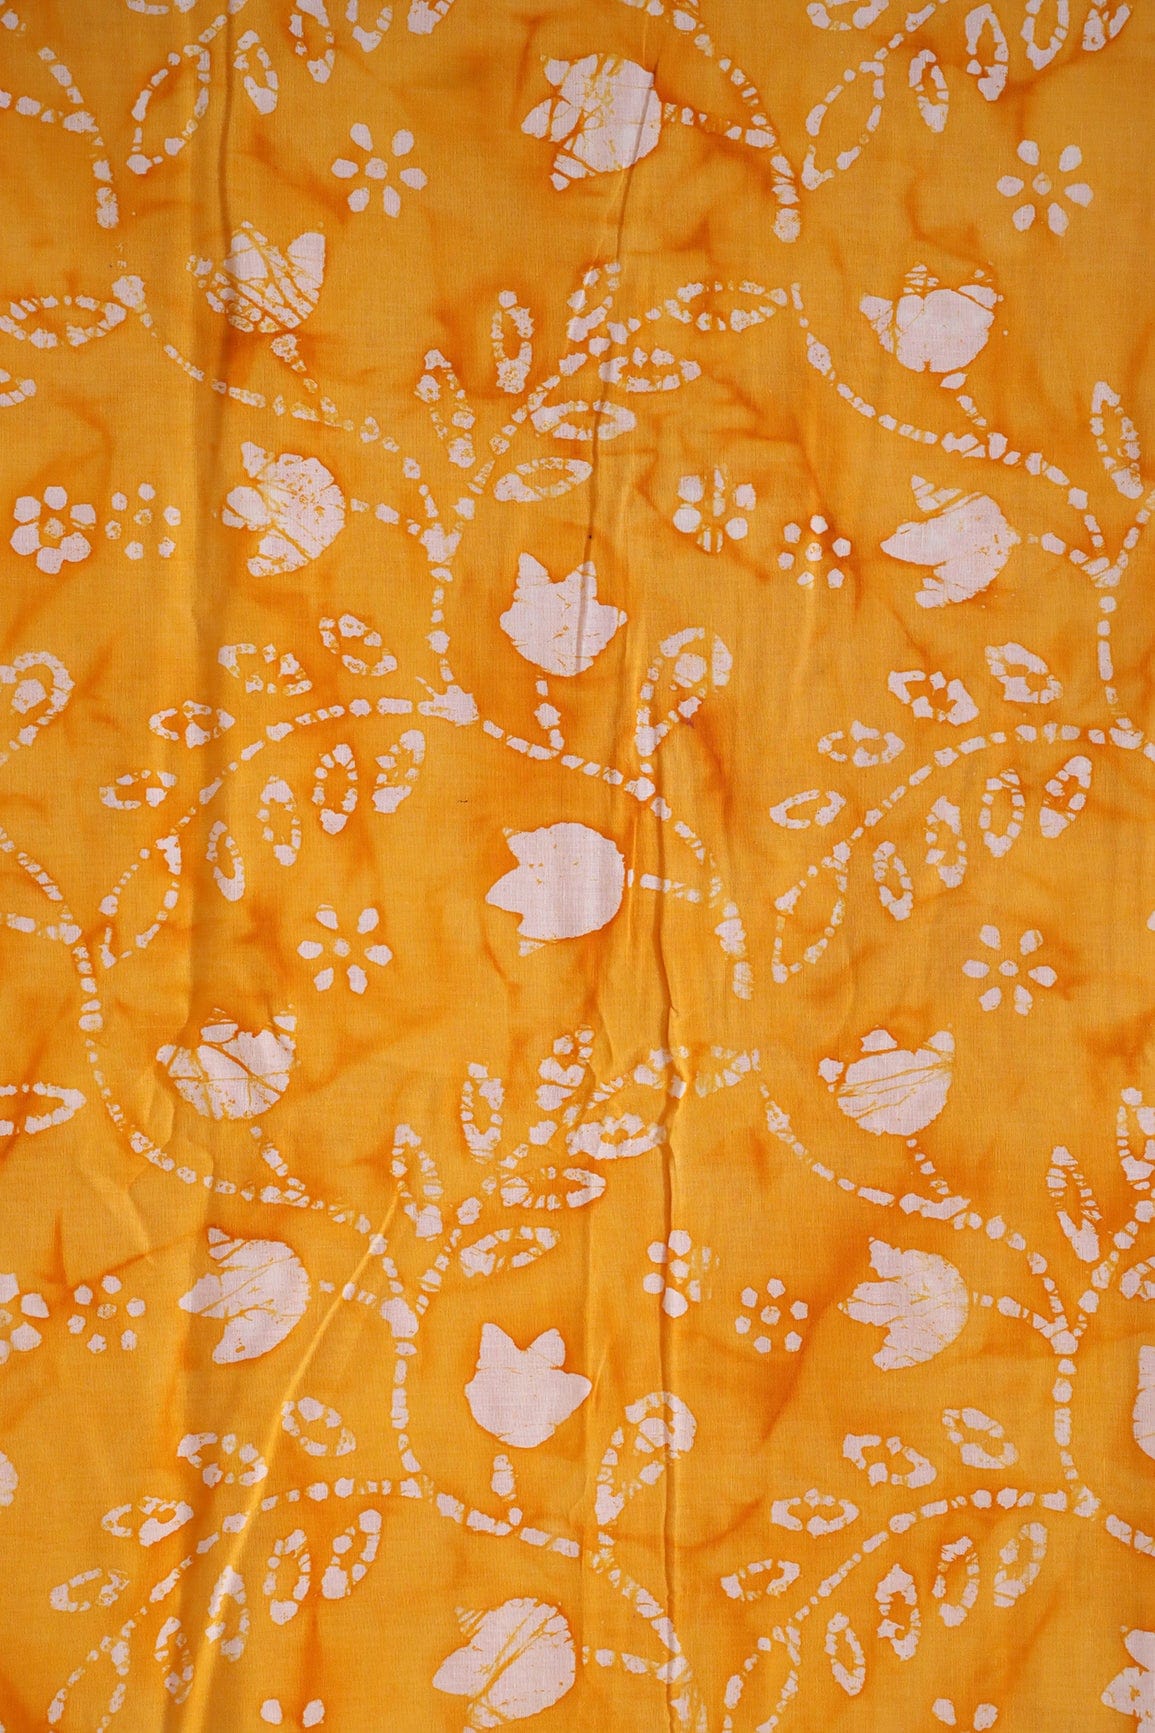 doeraa Prints White And Yellow Floral Pattern Batik Handblock Organic Cotton Fabric